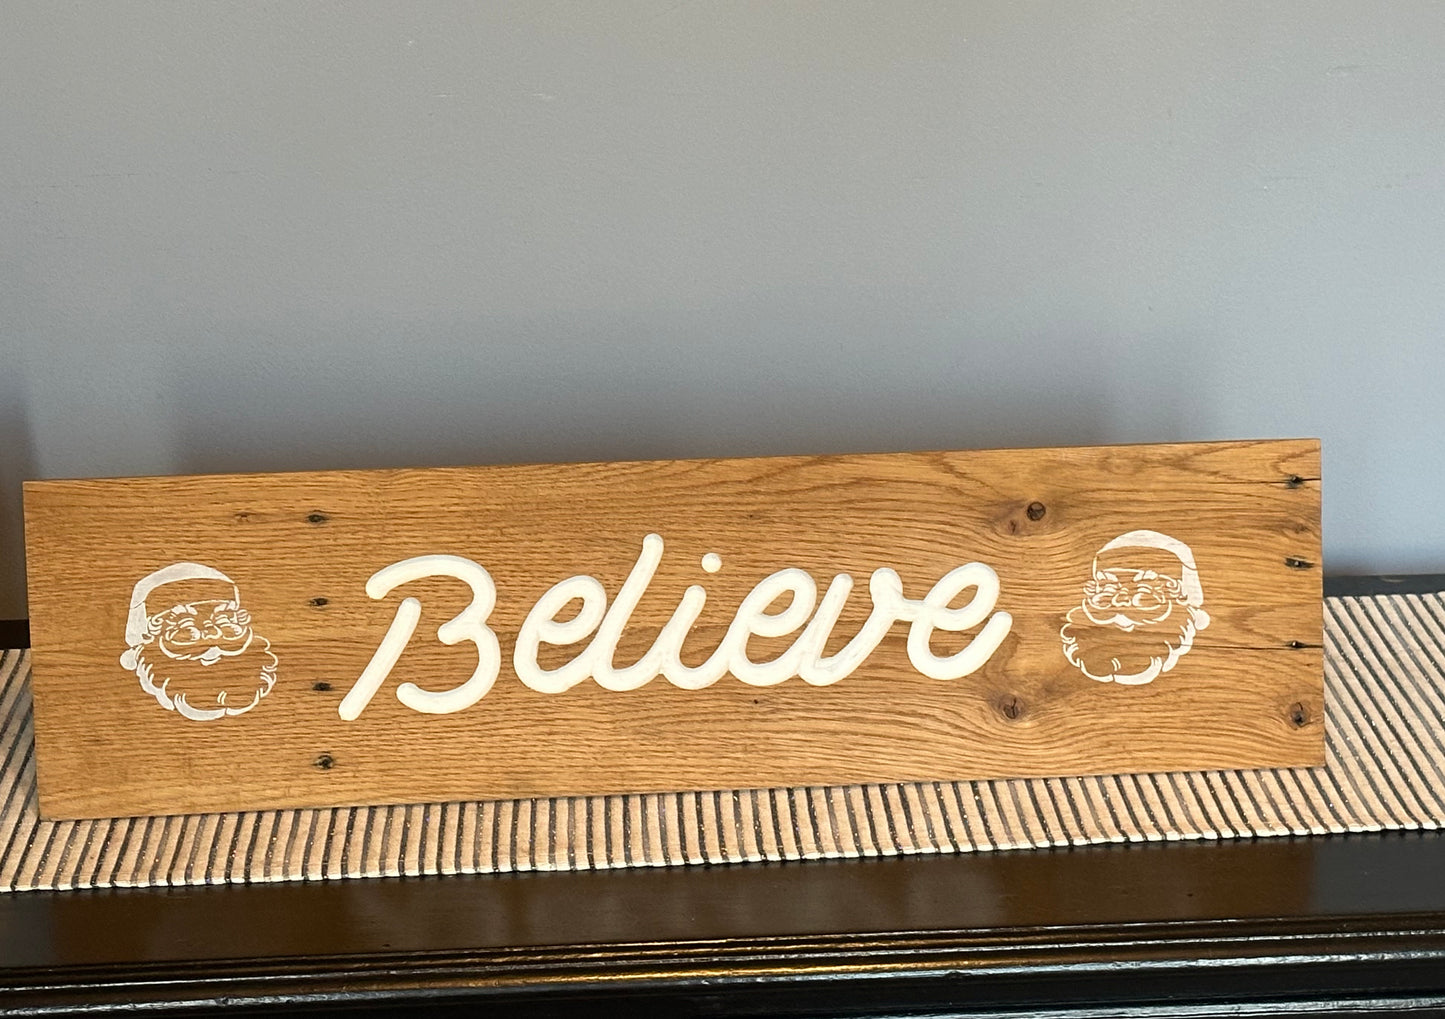 Believe sign